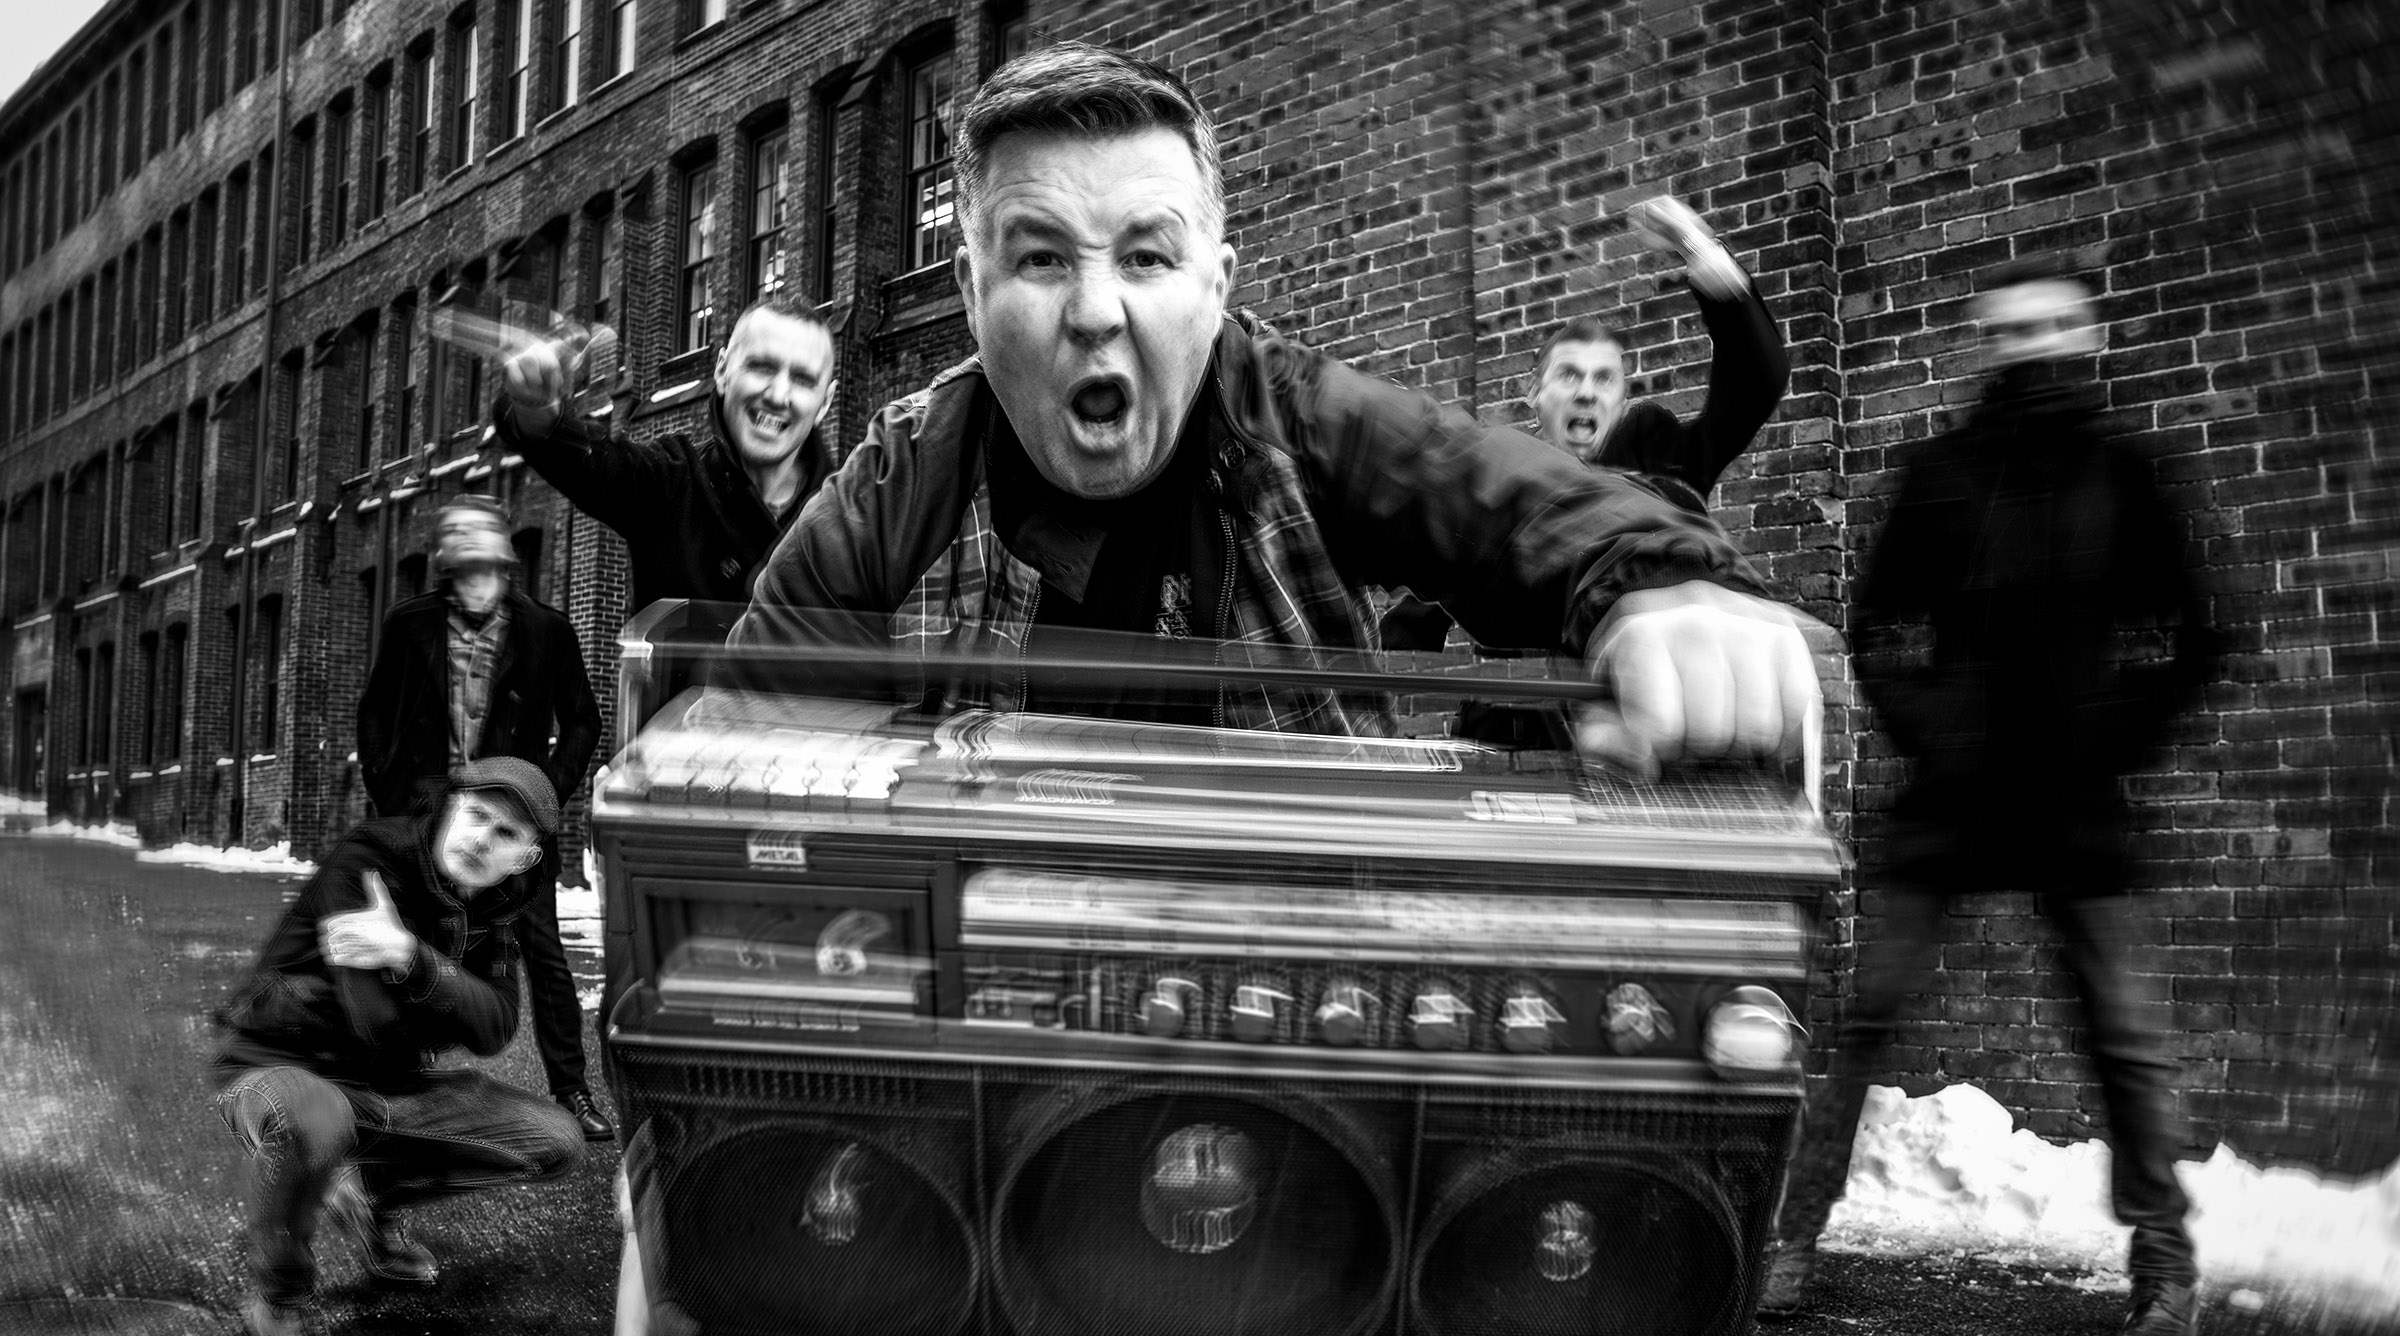 DROPKICK MURPHYS announce new studio album 'Turn Up That Dial' - Hear new single 'Middle Finger' 1